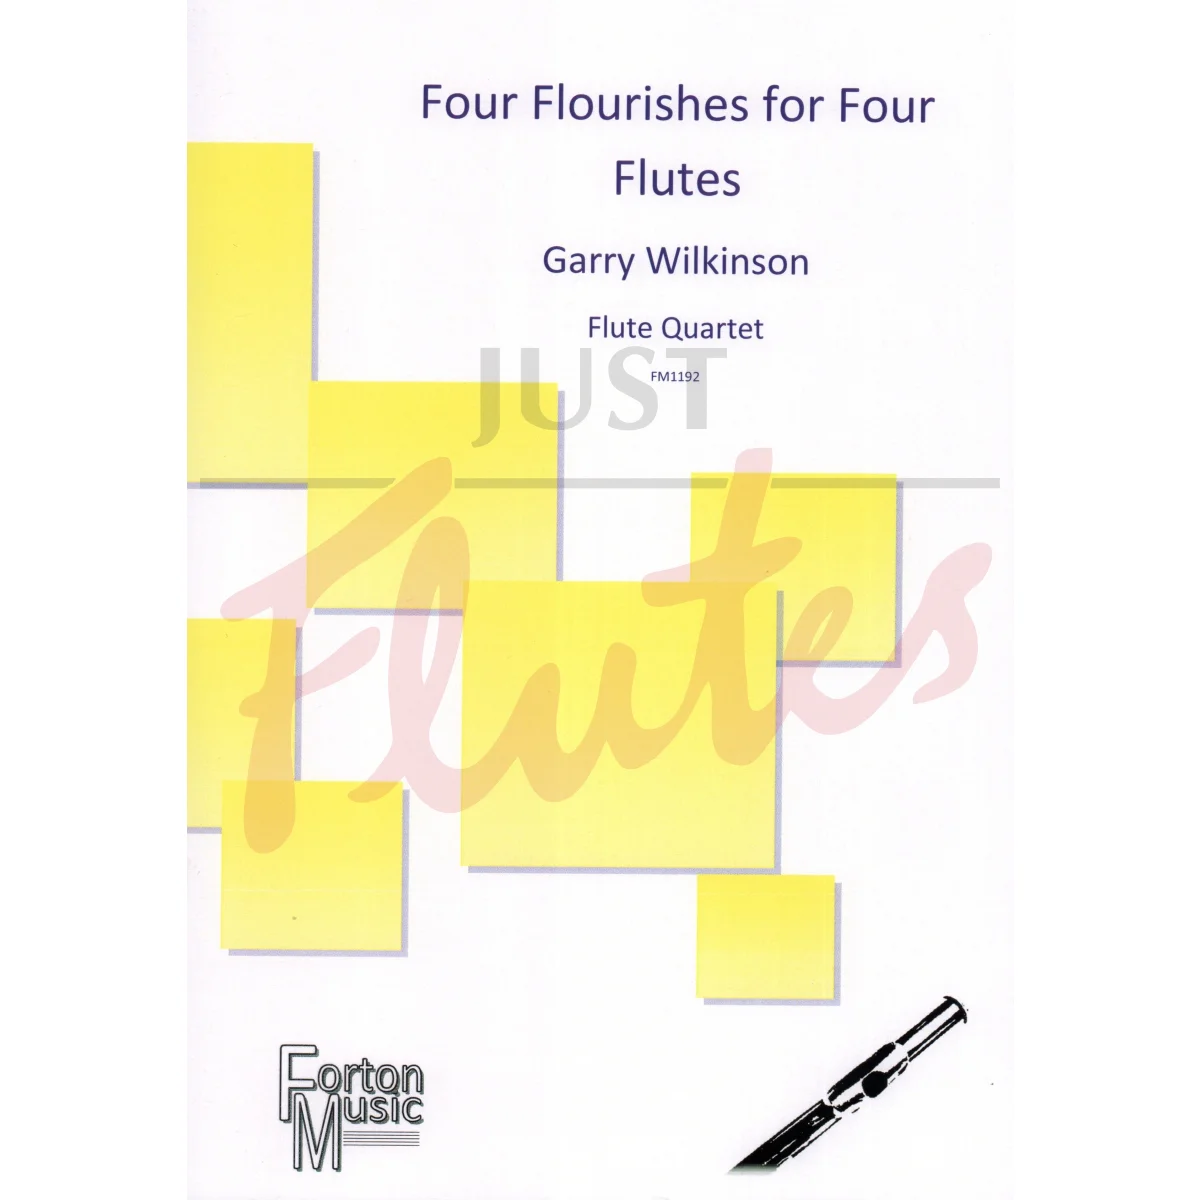 Four Flourishes for Four Flutes